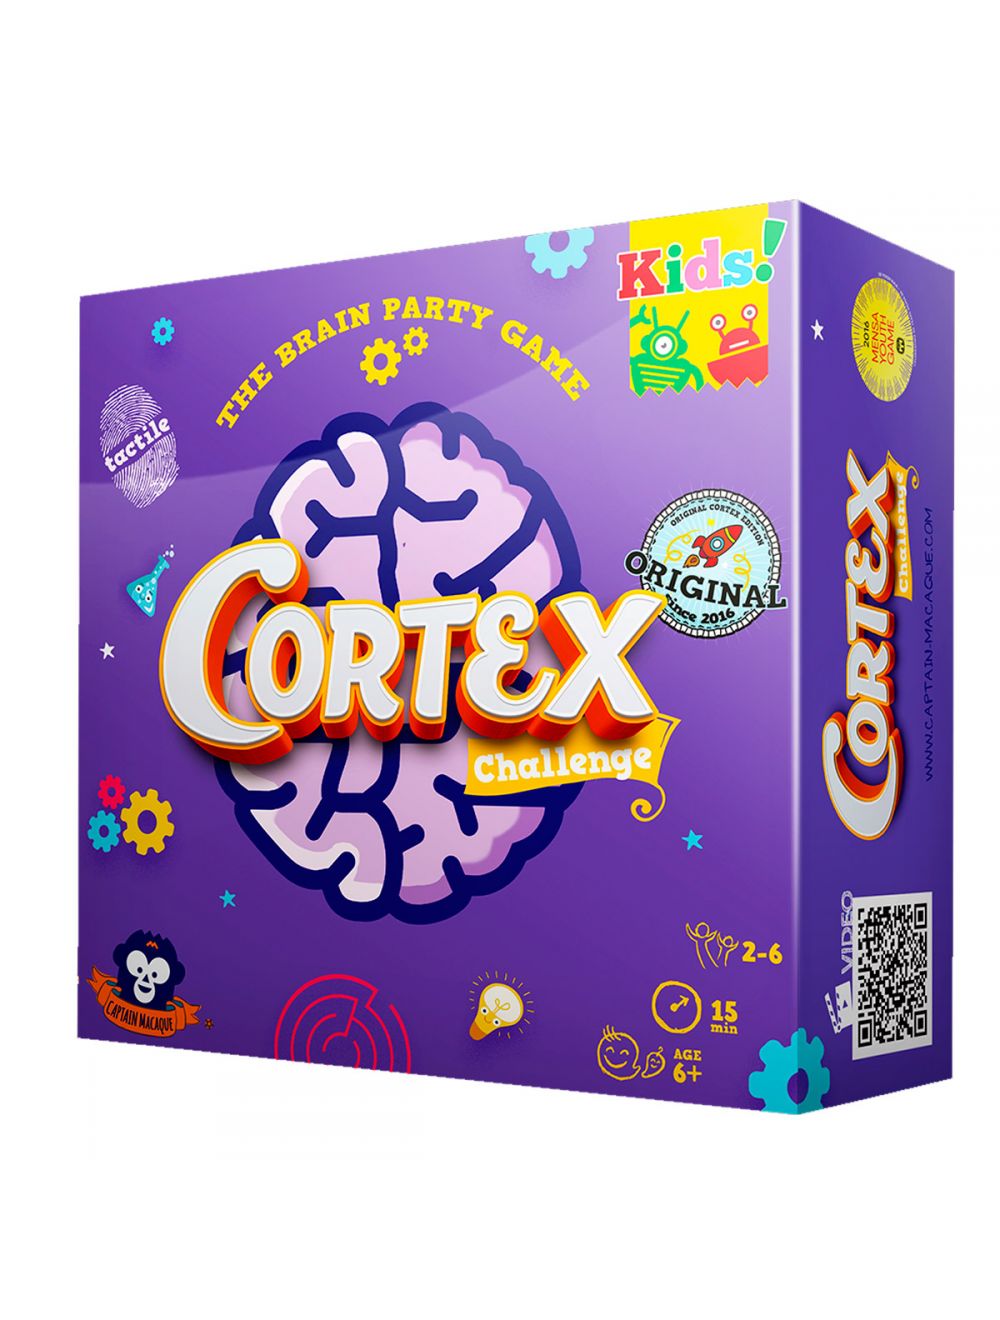 Cortex Kids 1